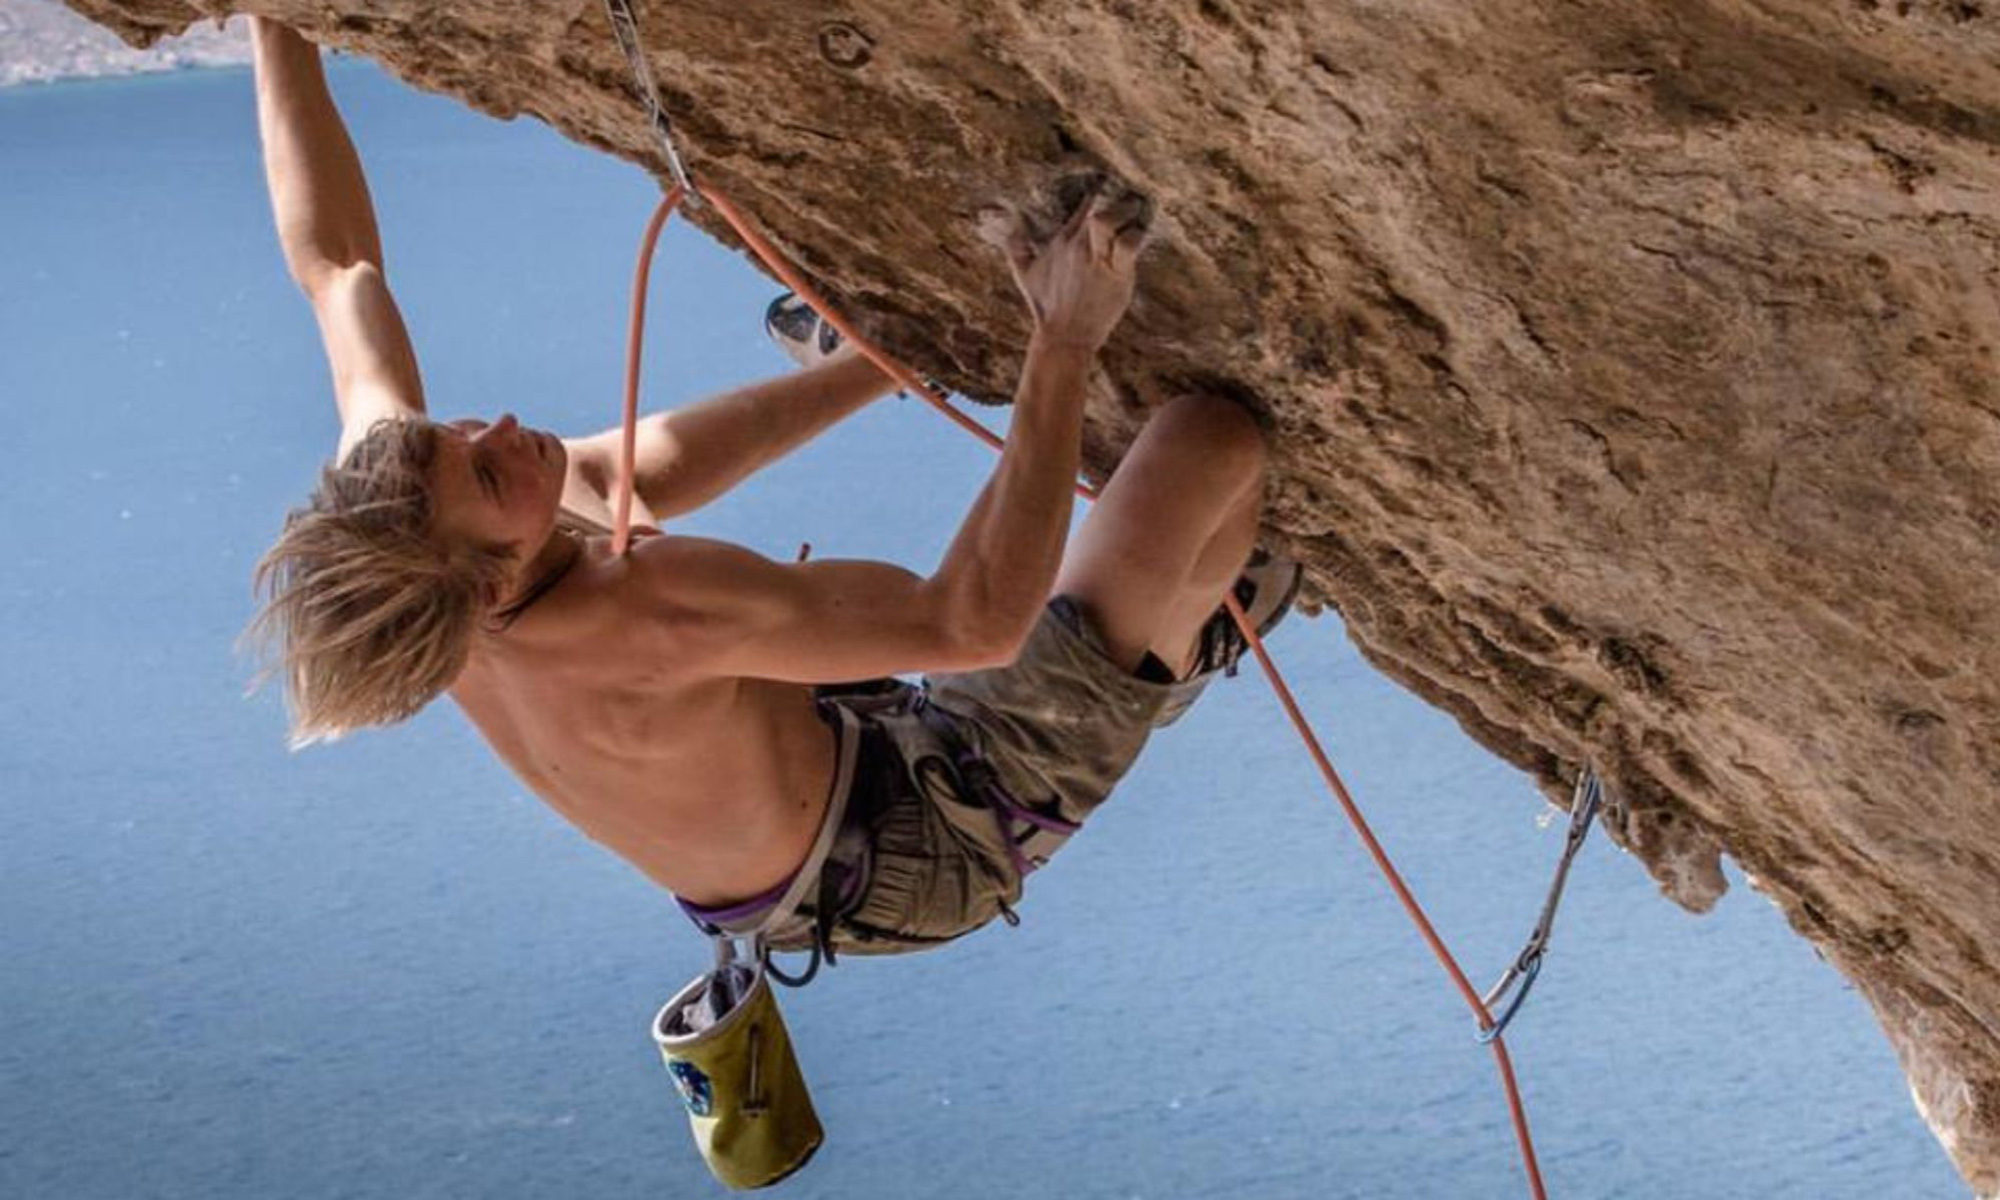 Style first! – Official website of rock climber Alexander Megos